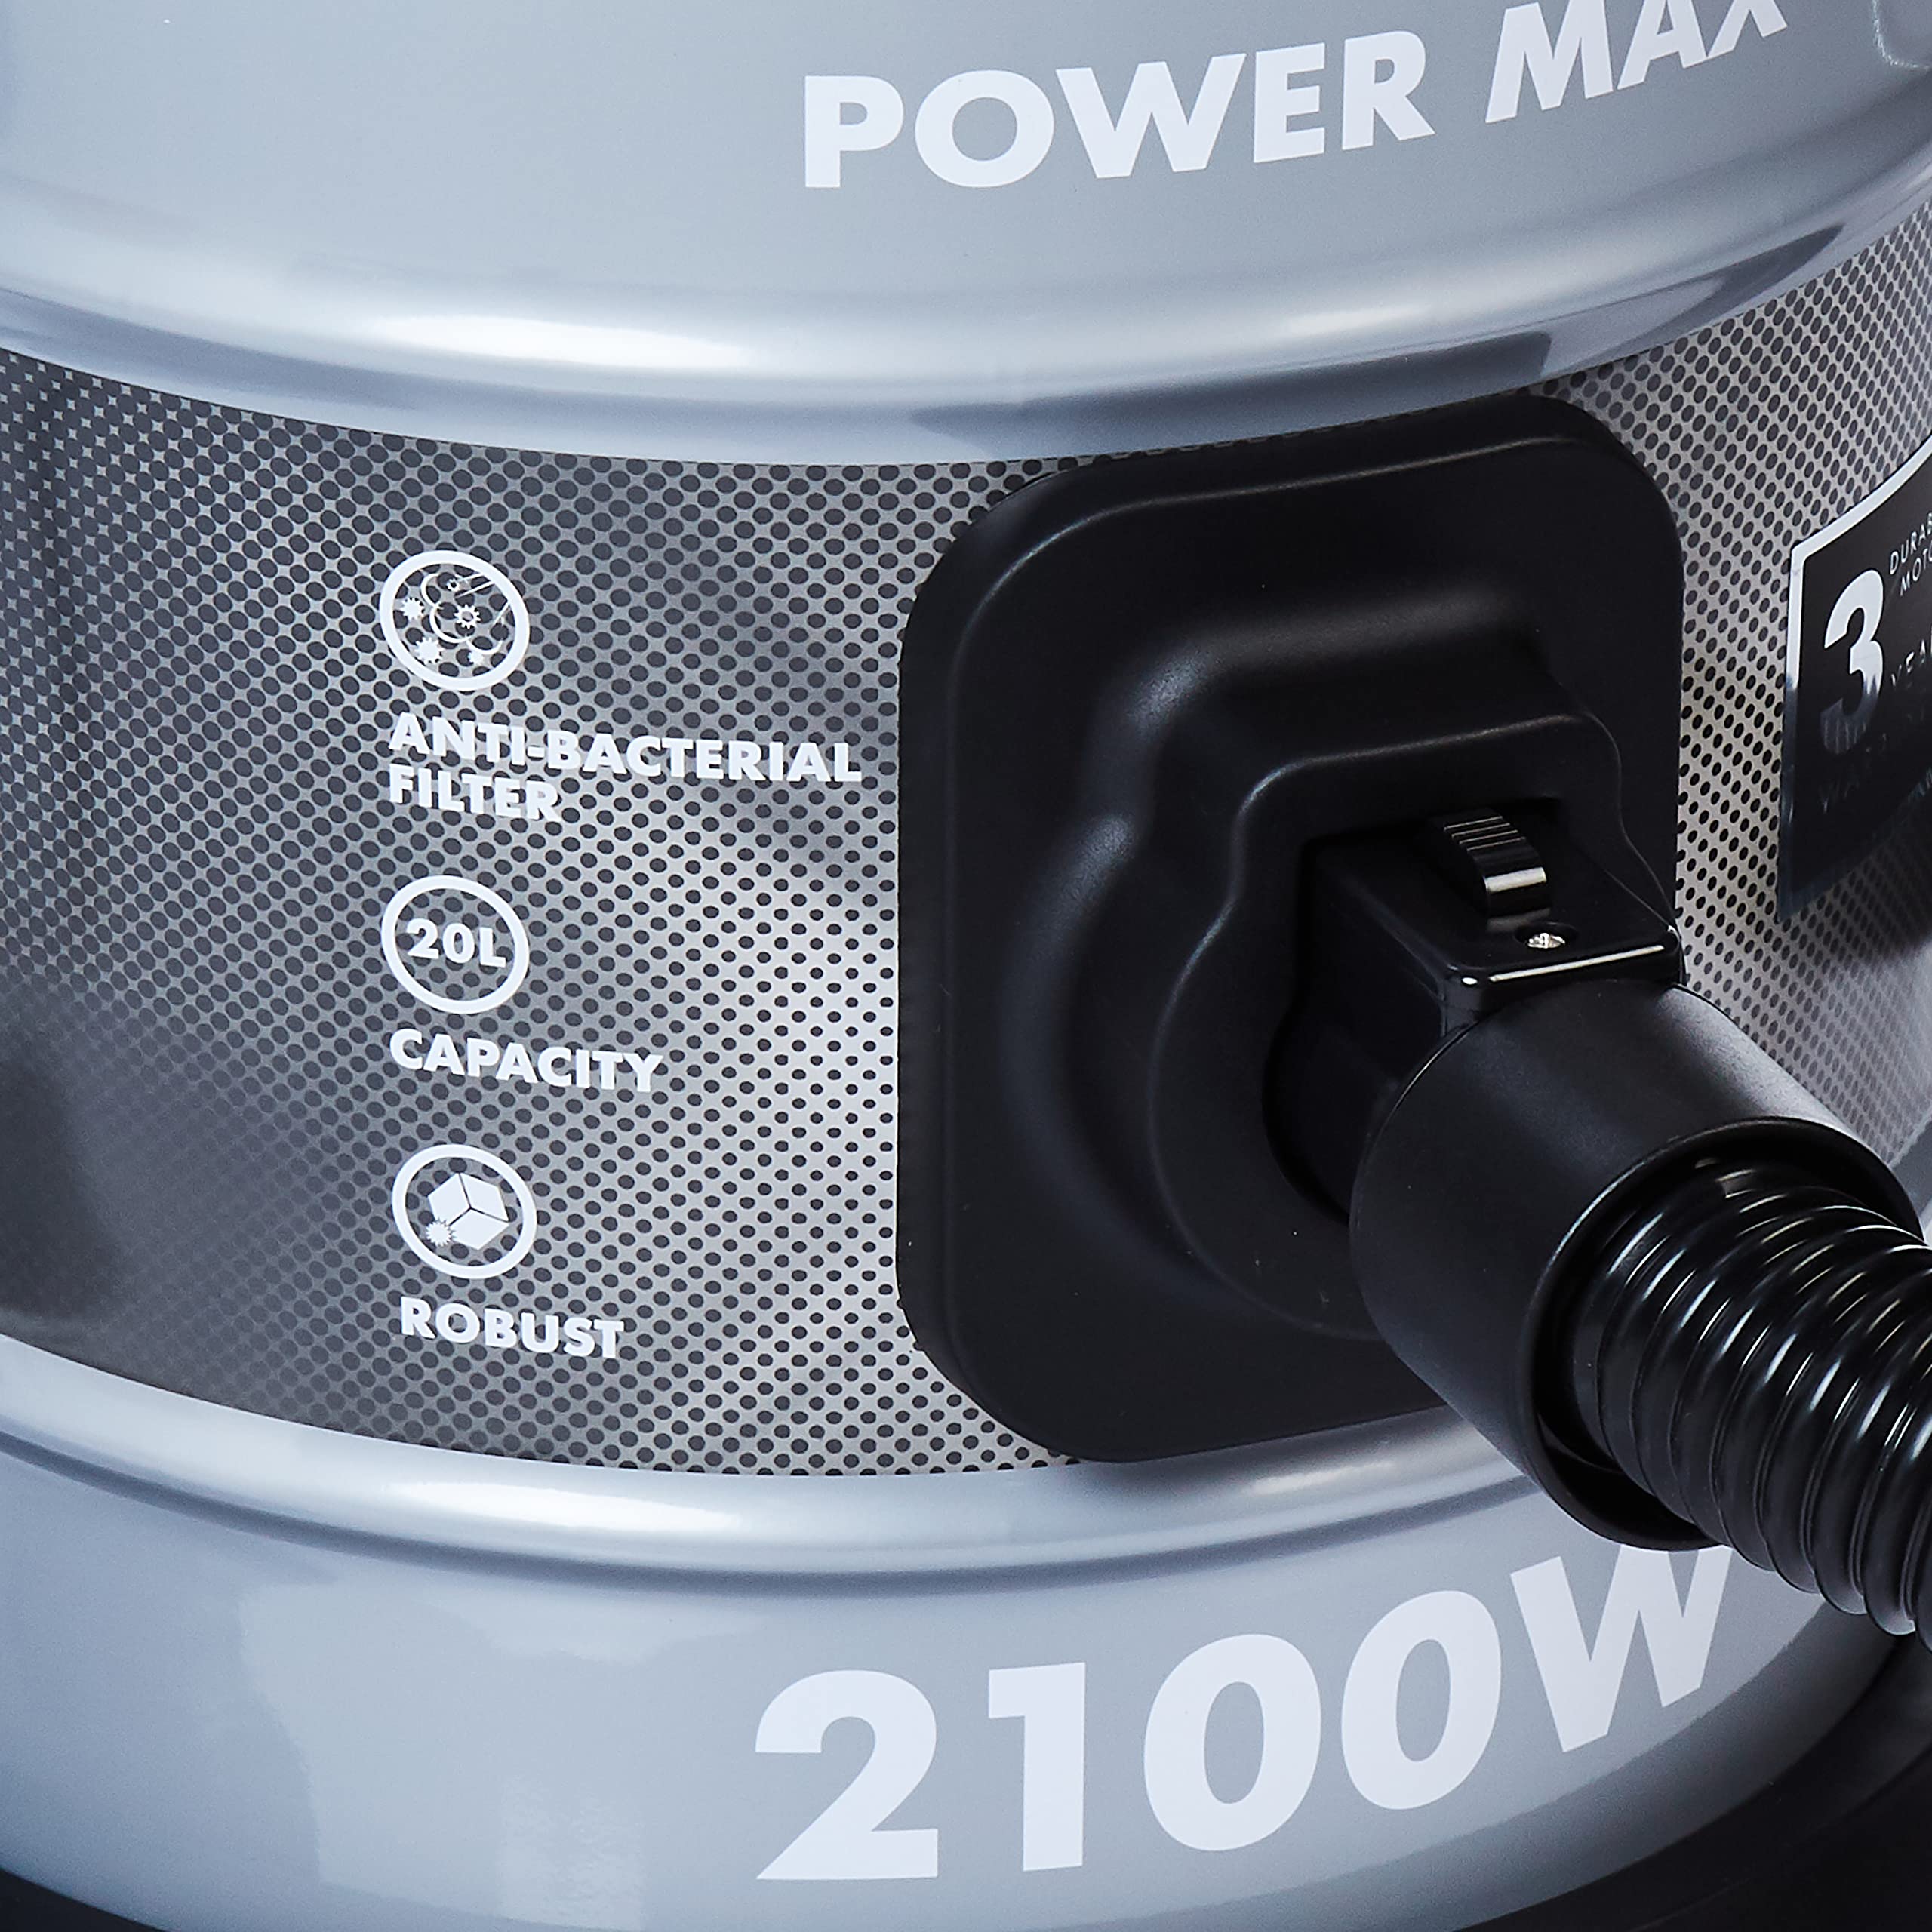 Hoover Power Max Drum Vacuum Cleaner 20 Litre Capacity, Large Capacity, 2100W  مكنسة كهربائية هوفر 2100 واط باور ماكس تانك